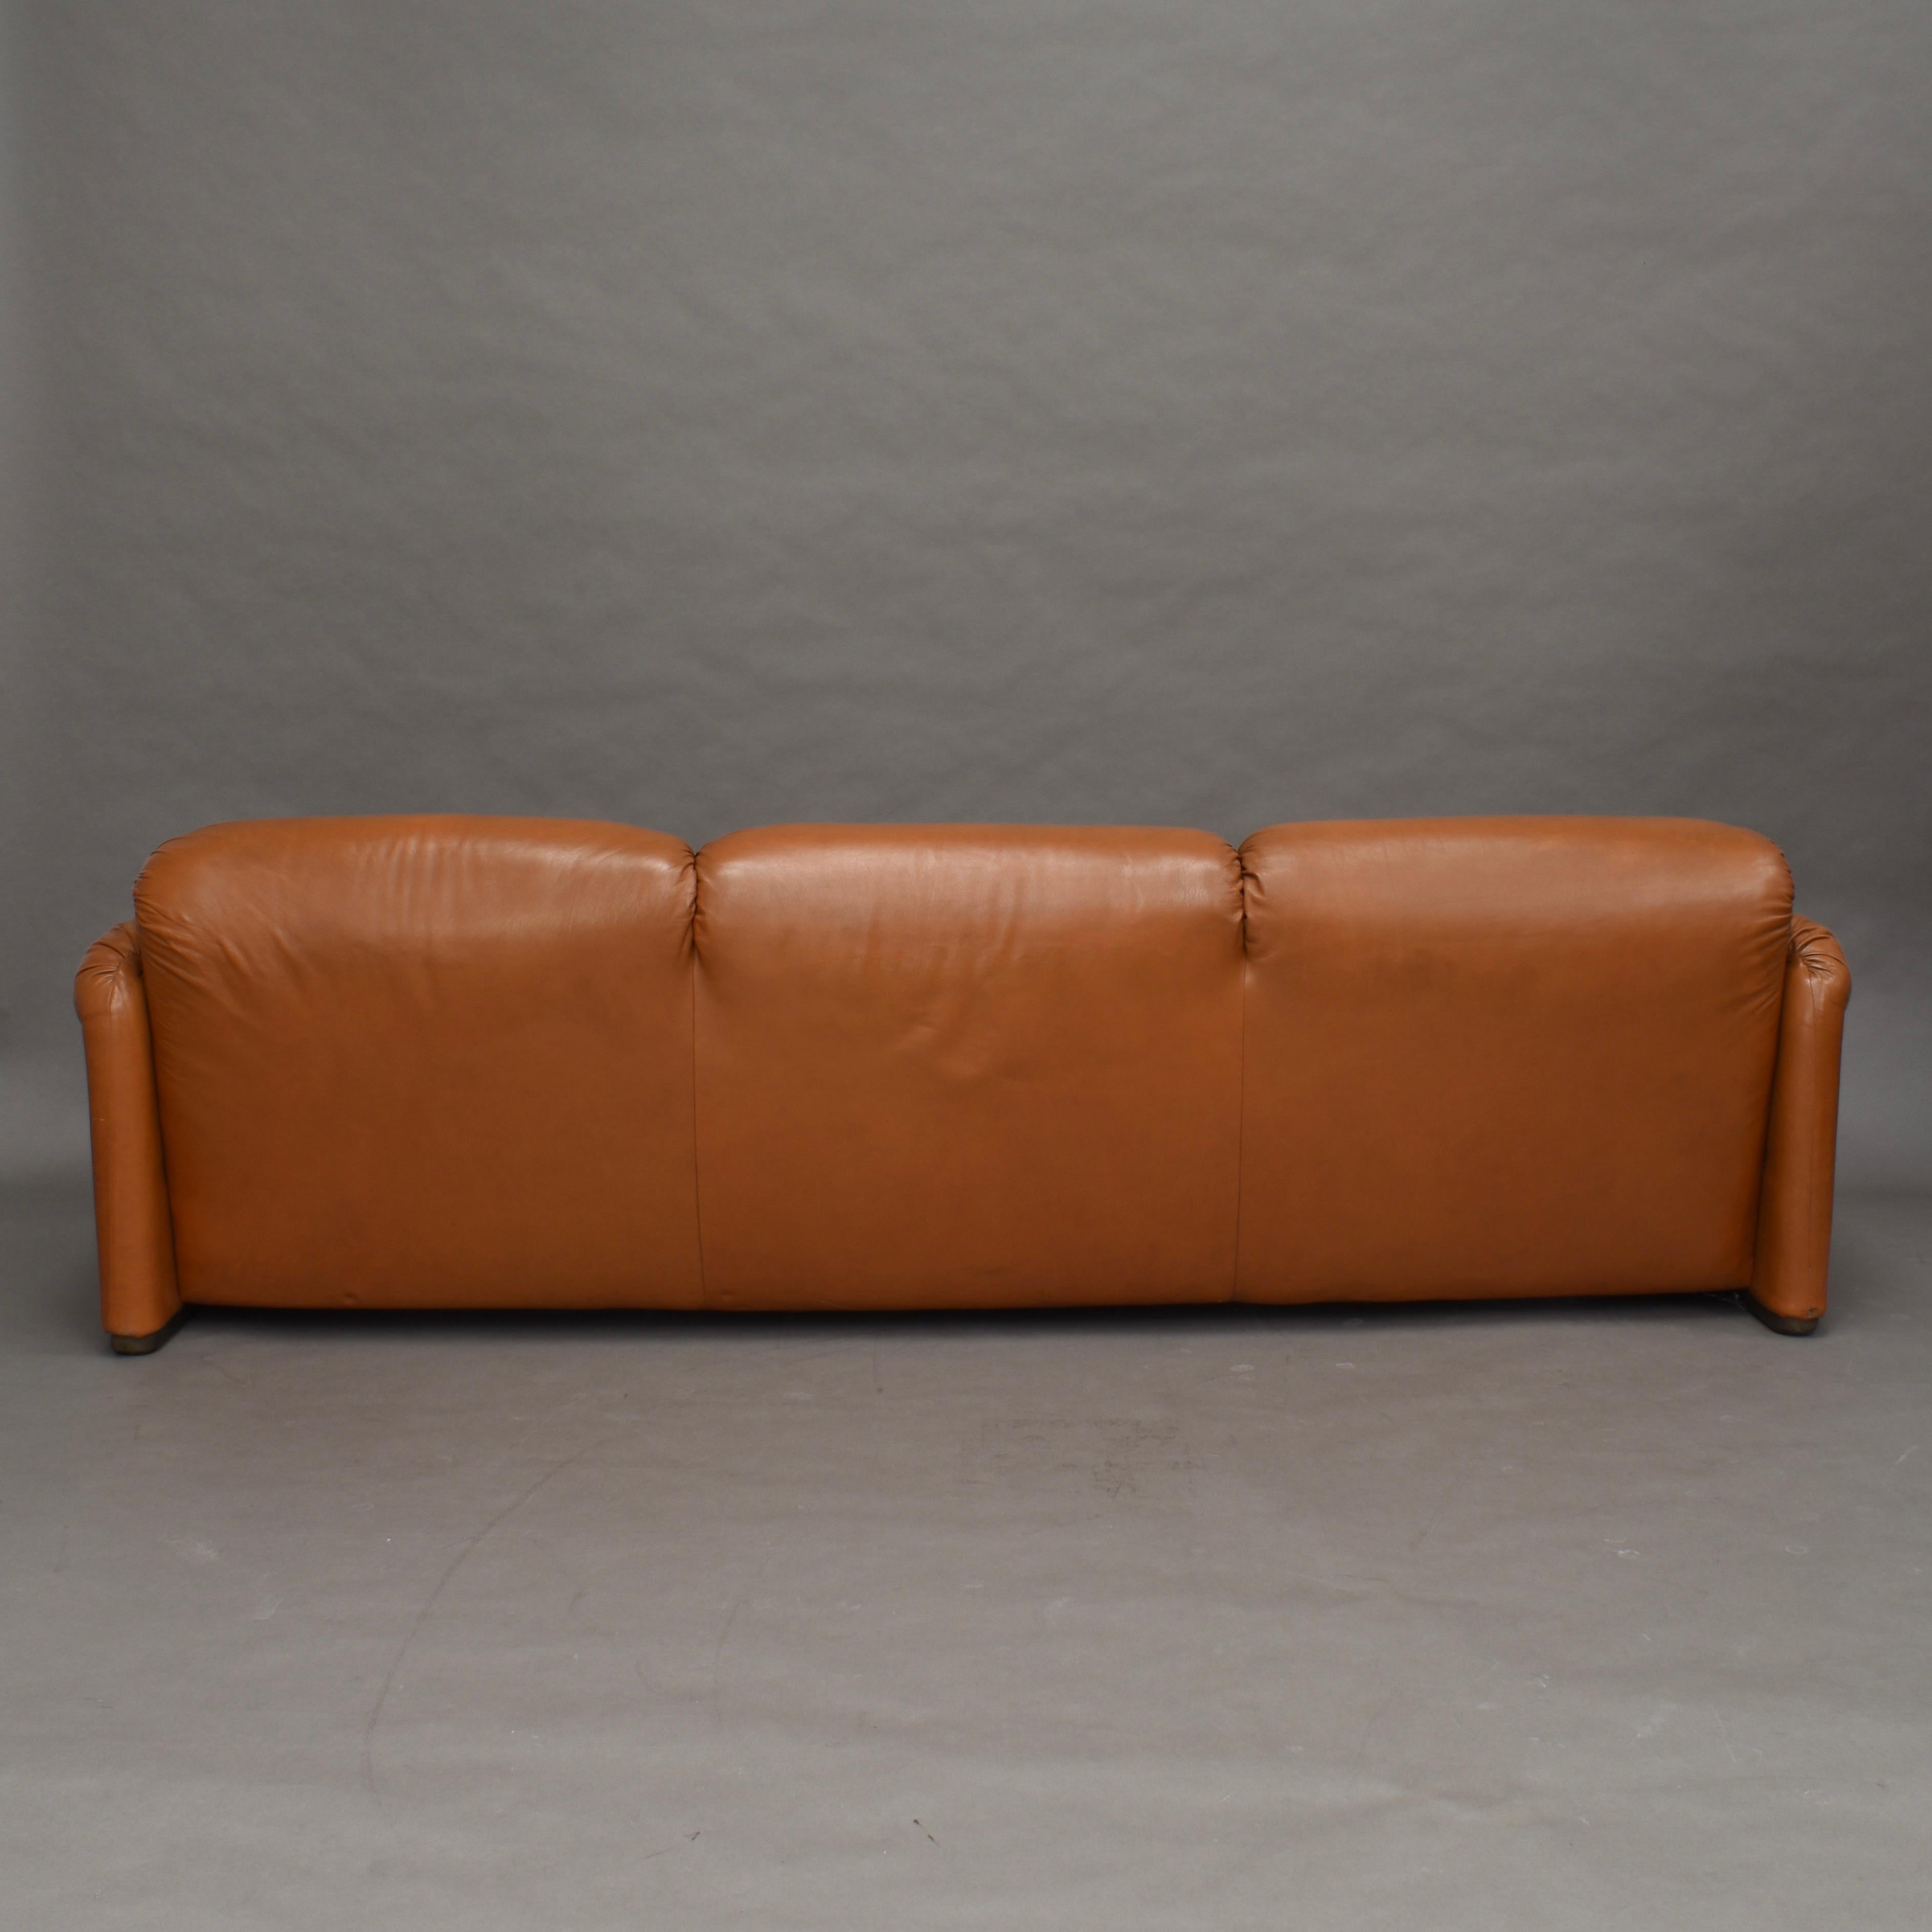 Italian Early Maralunga Sofa in Tan Leather by Vico Magistretti for Cassina, Italy, 1973